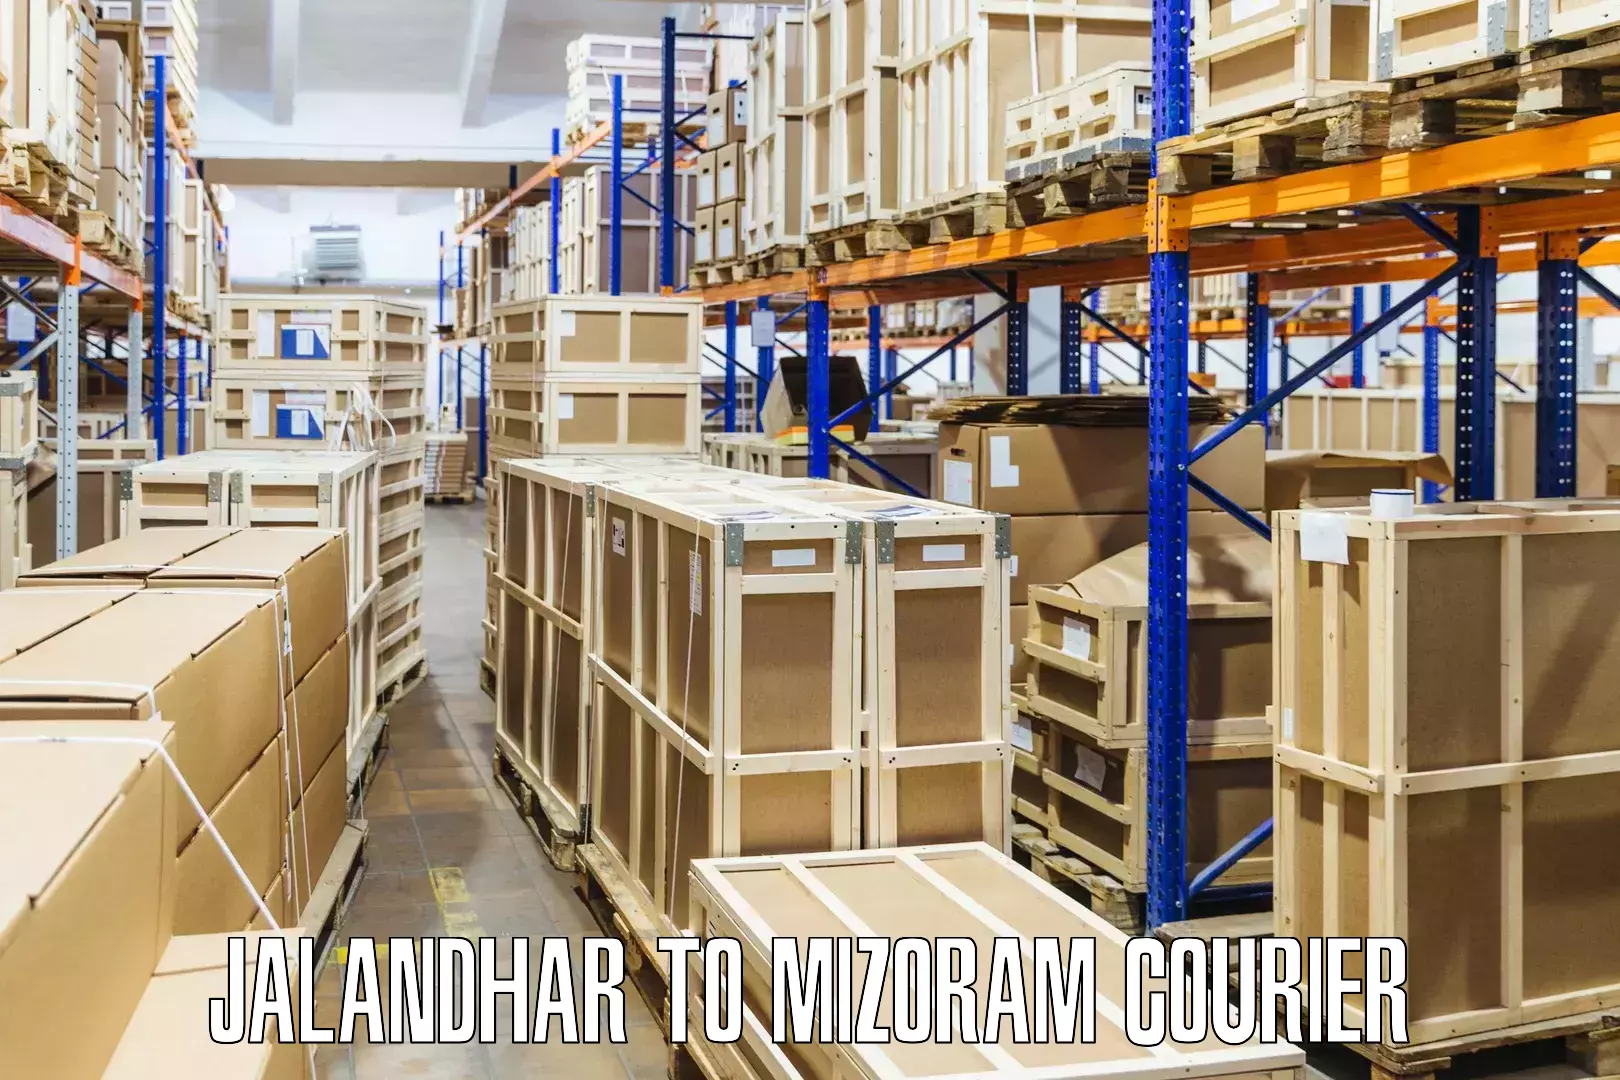 Package delivery network Jalandhar to Mizoram